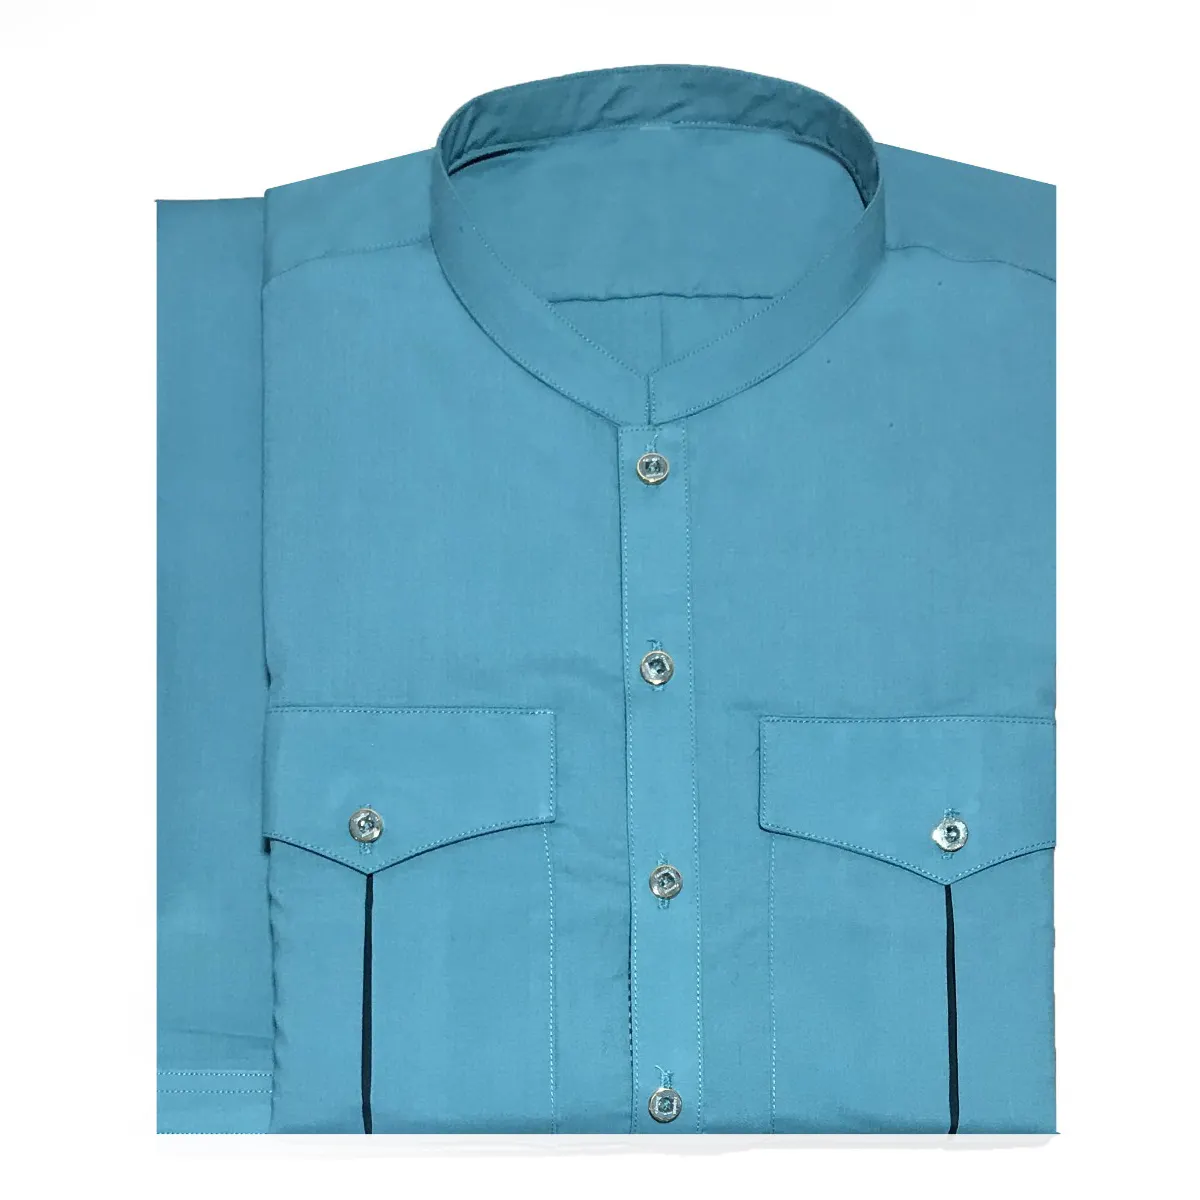 Wholesale Stitched Men Salwar Kameez/kurta Design In Blue Color in wash & wear with Jamawar Pajama For Winter Collection